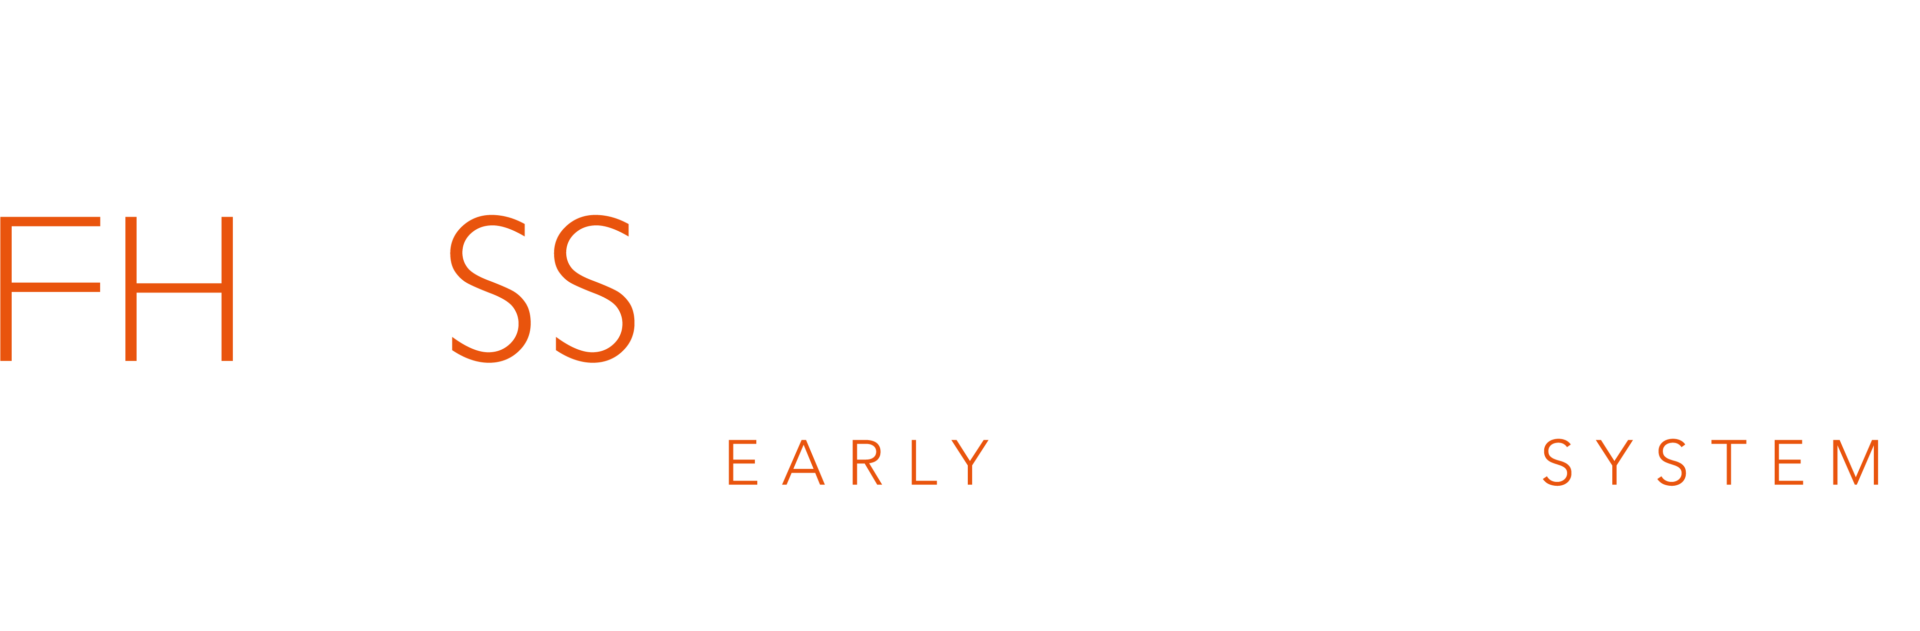 Cycle Lane Early Warning System logo